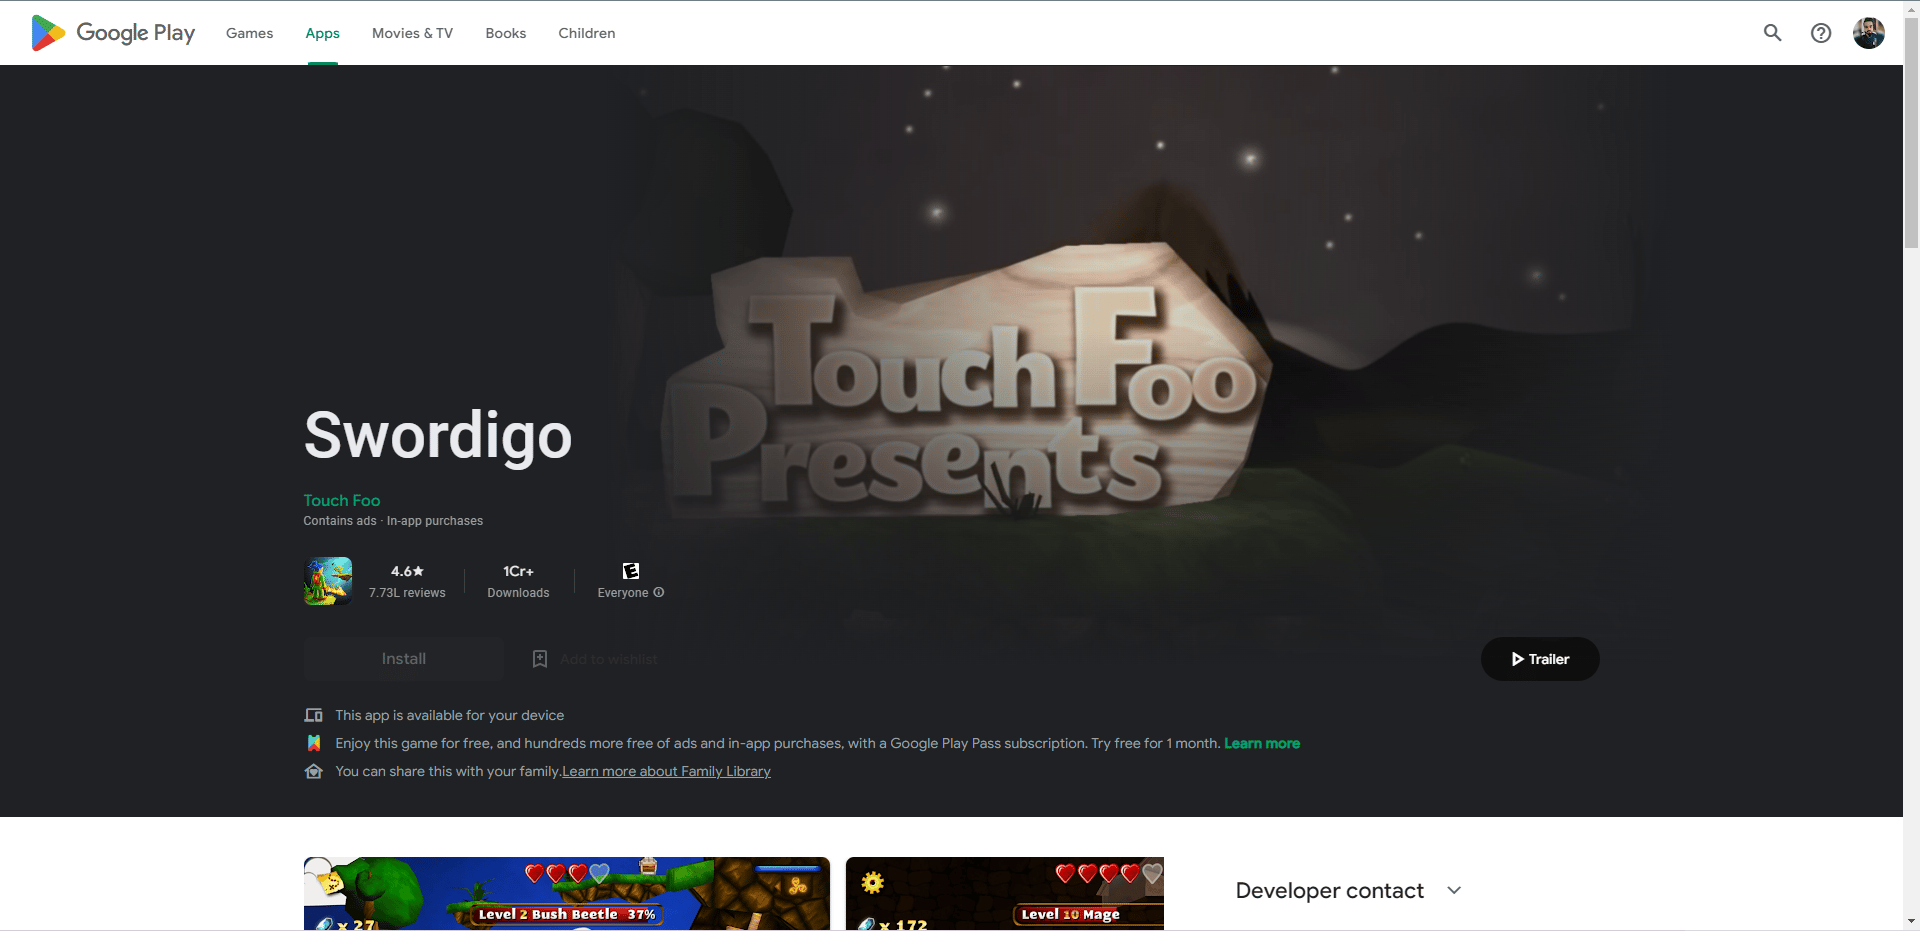 Swordigo play store webpage. Best Games Like Legend of Zelda for Android